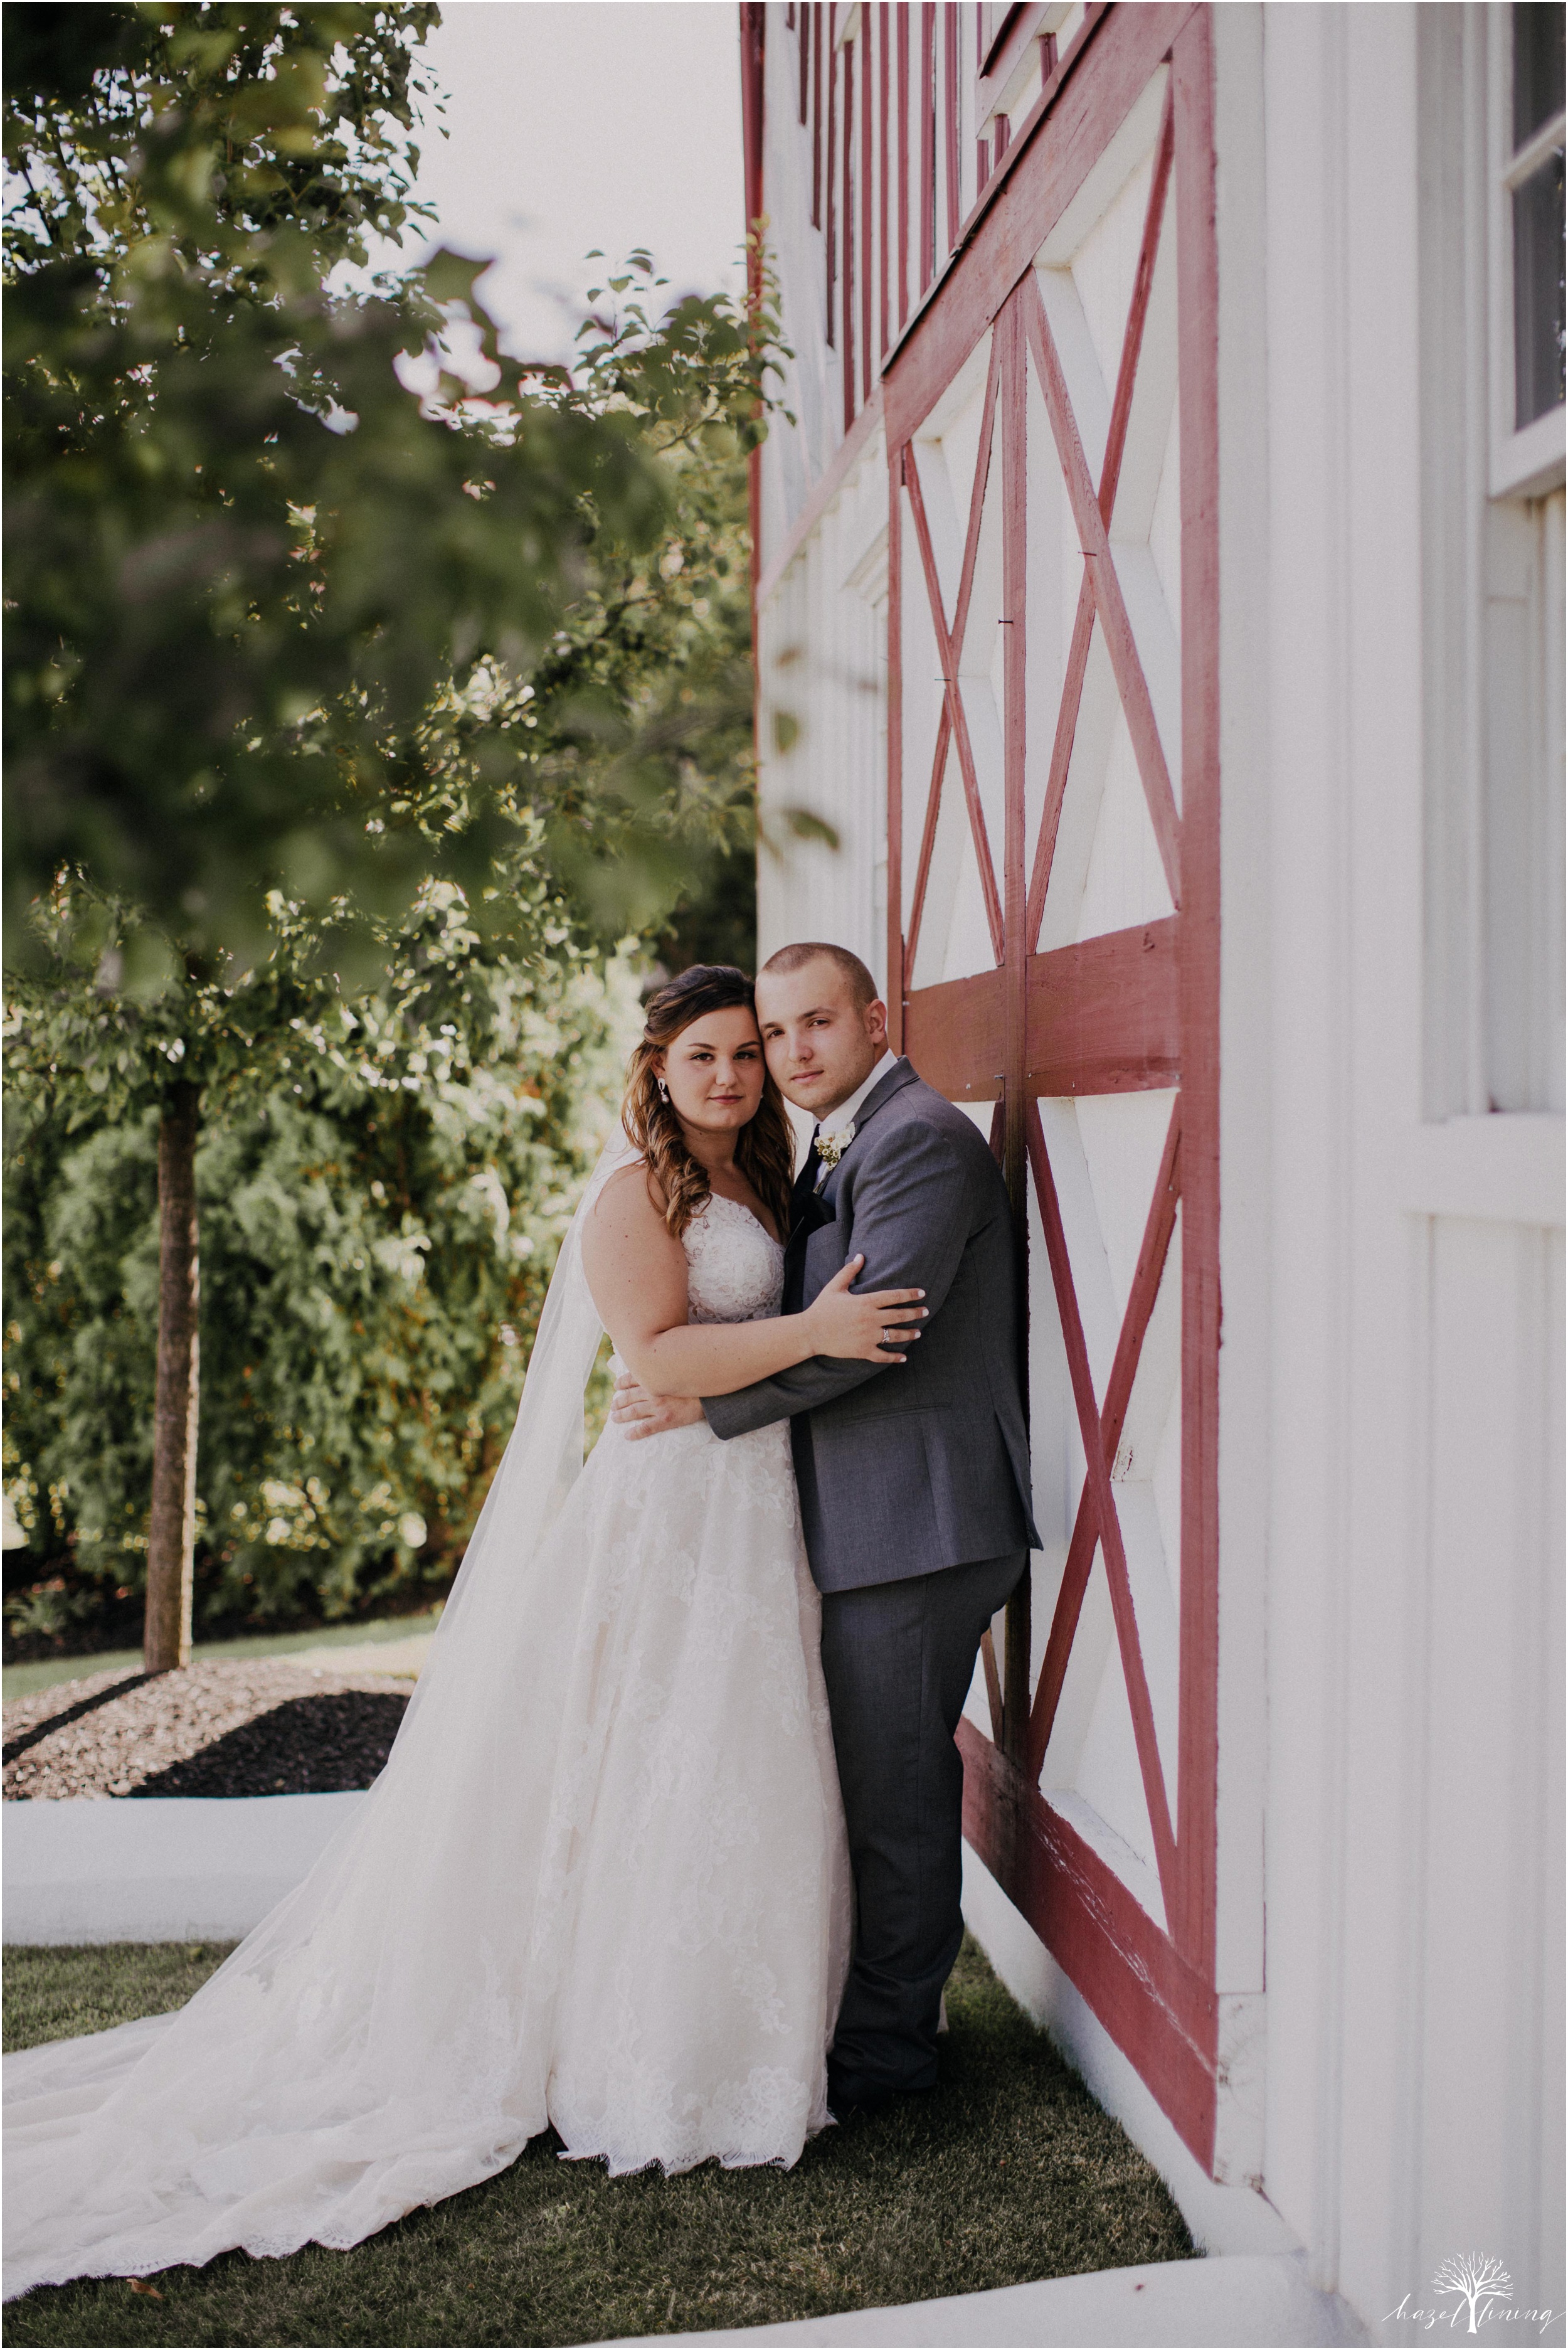 michaela-pagano-micah-bosico-normandy-farms-bluebell-pennsylvania-summer-wedding-hazel-lining-photography-destination-elopement-wedding-engagement-photography_0070.jpg